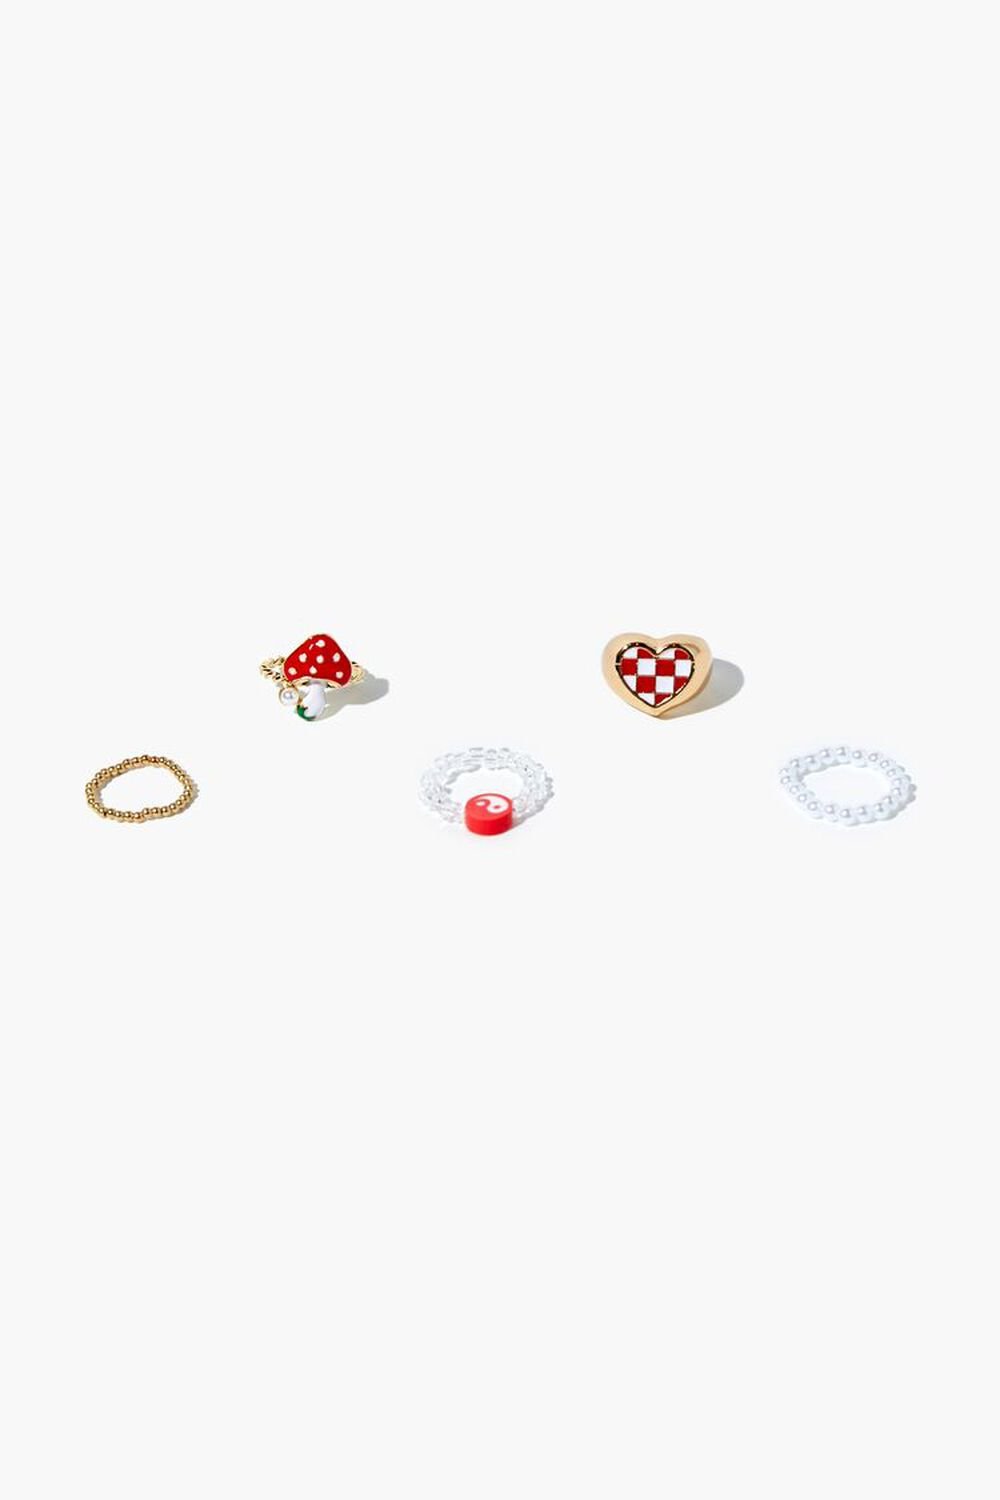 RED/GOLD Mushroom & Heart Ring Set, image 1